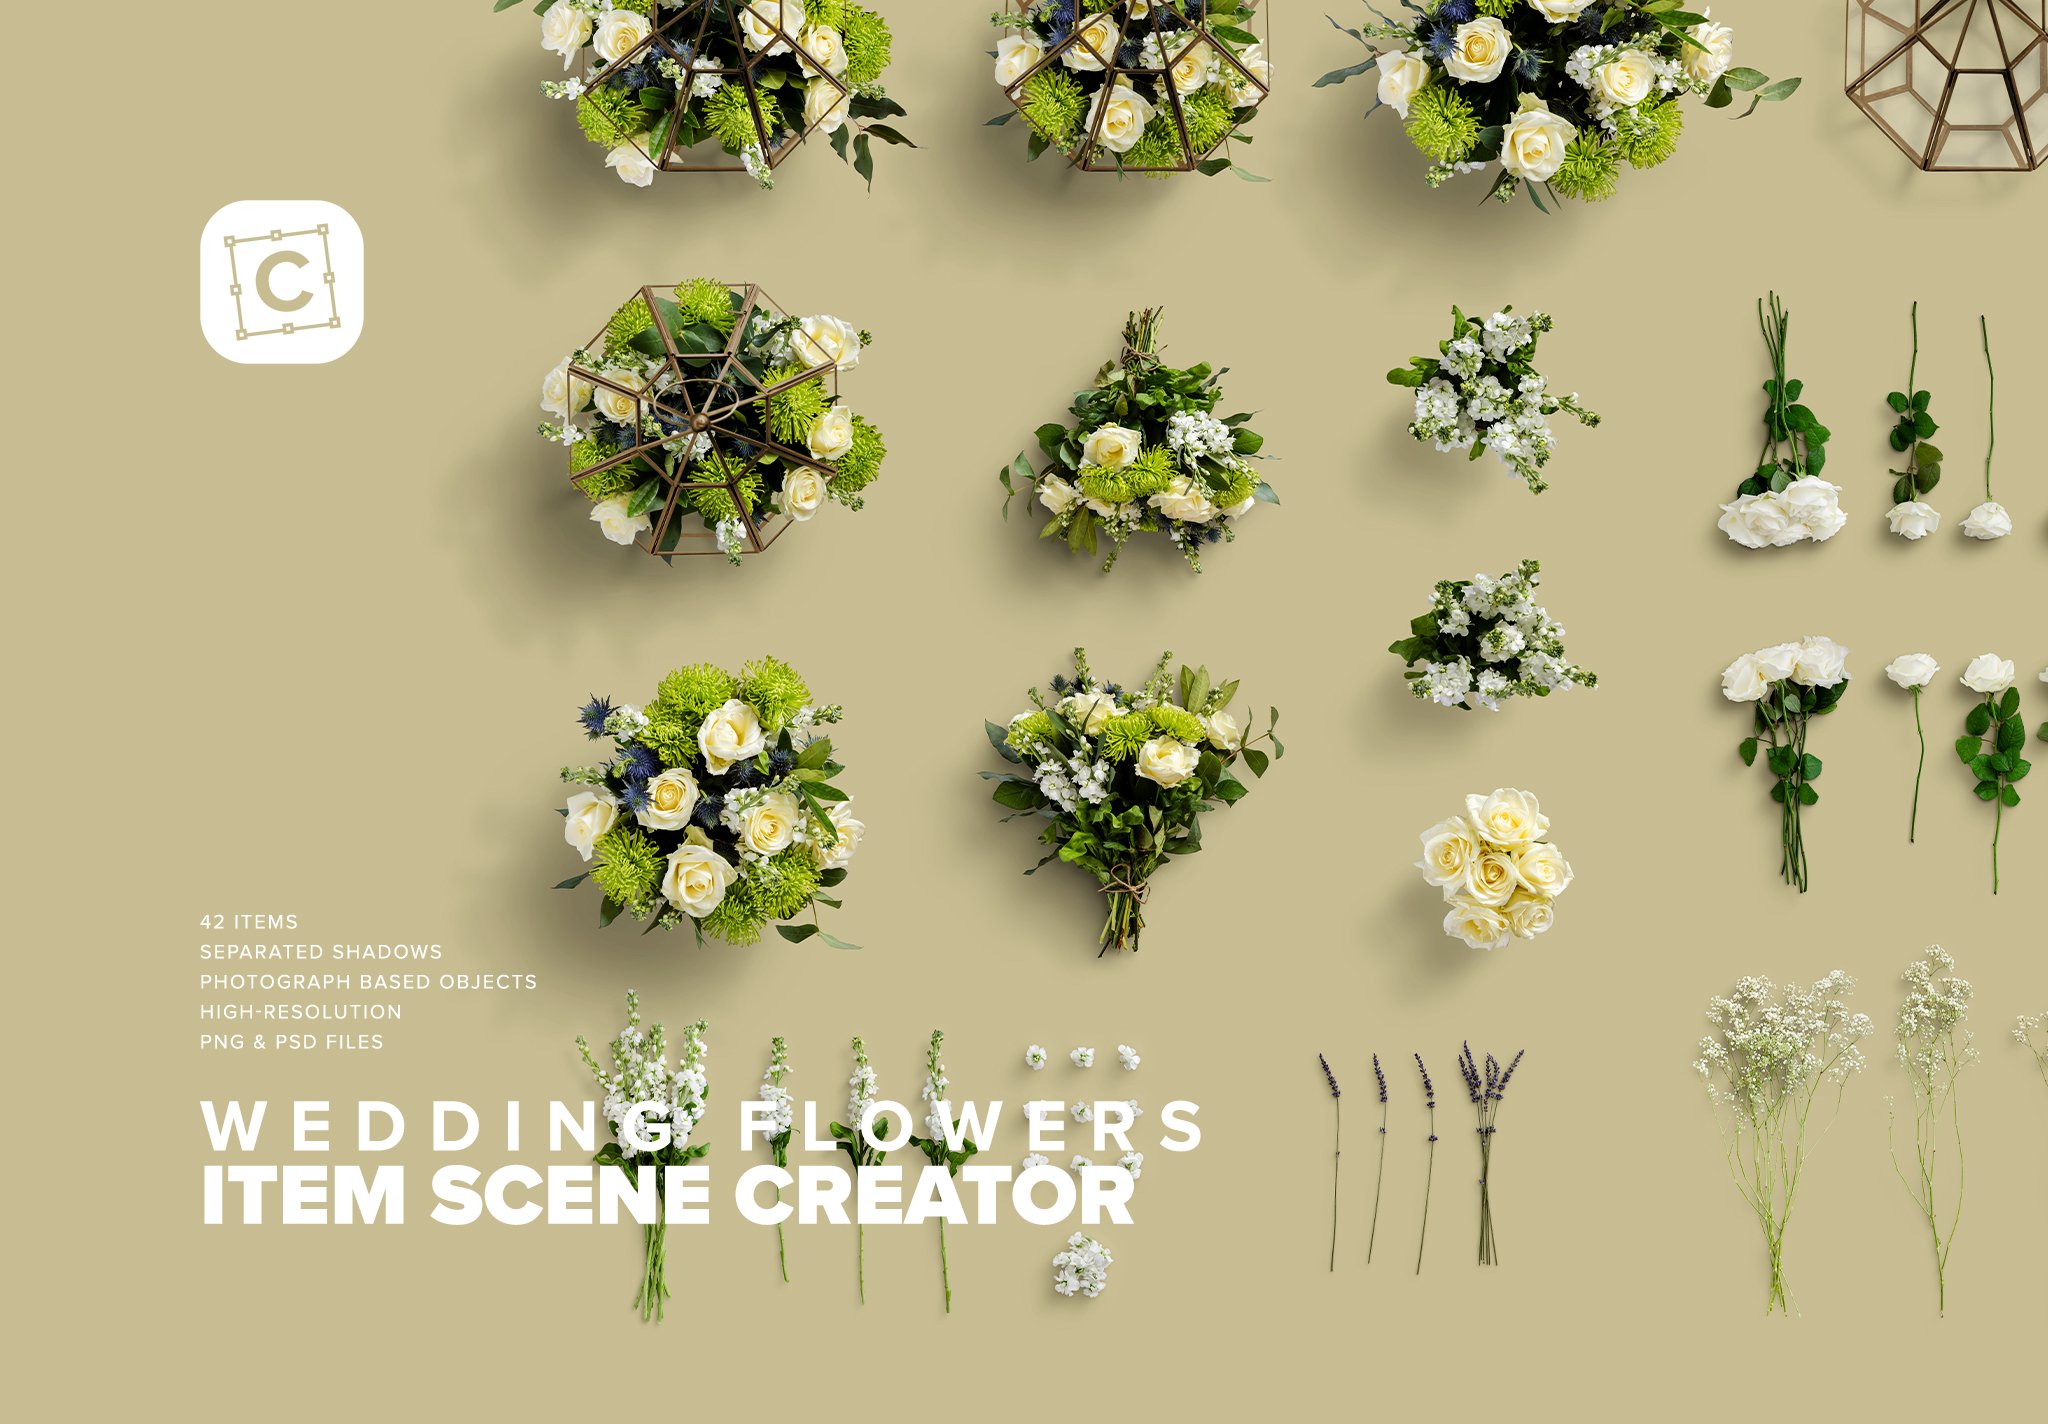 Wedding Floral Item Scene Creator cover image.